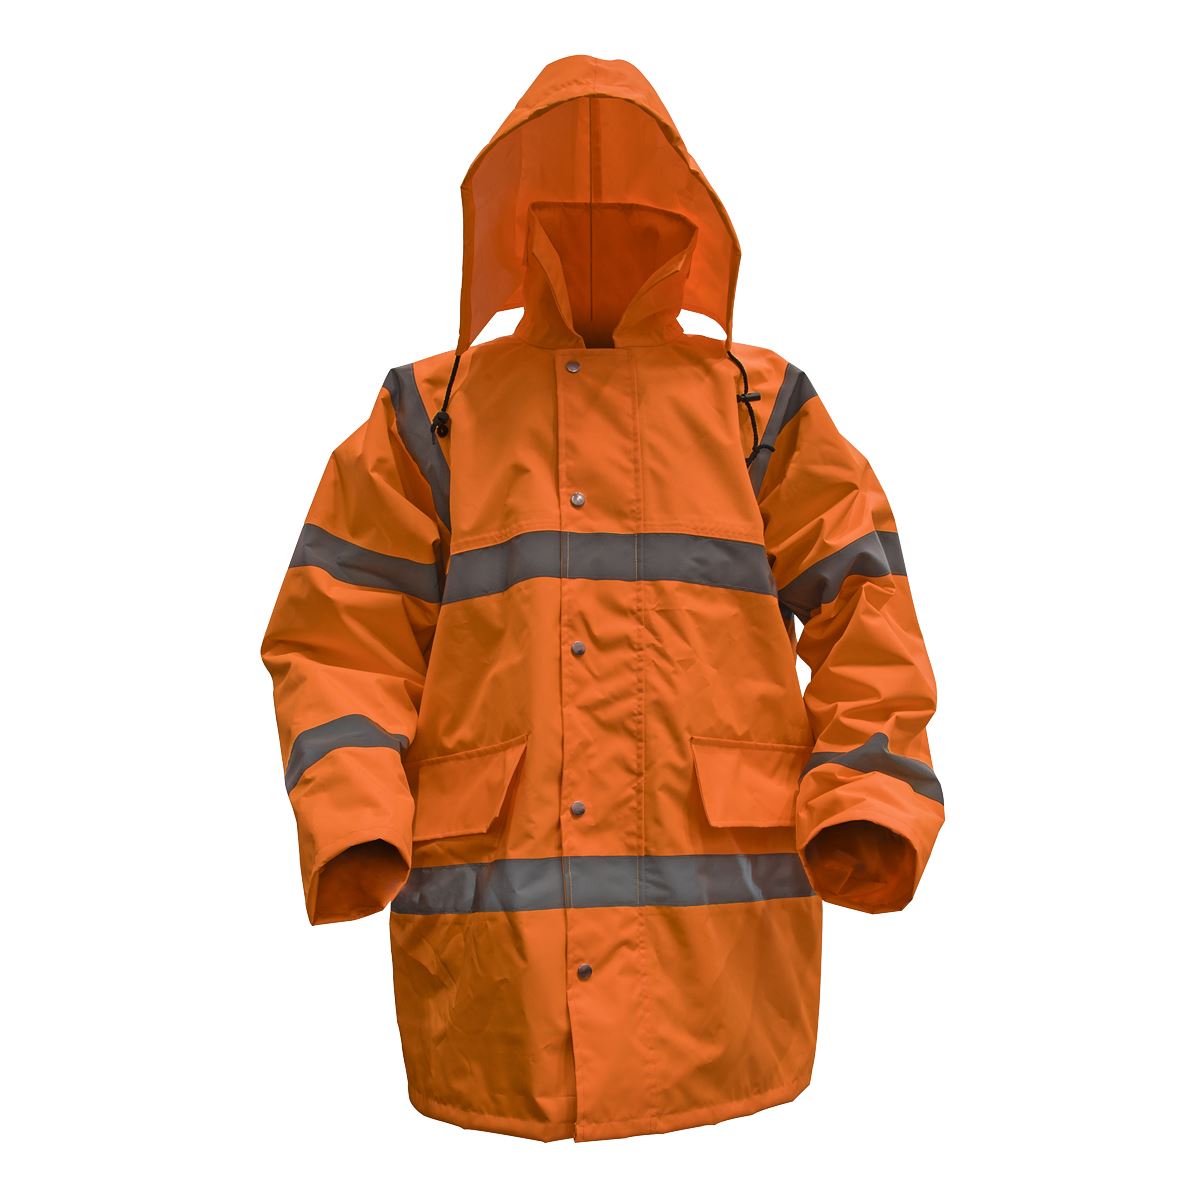 Worksafe by Sealey Hi-Vis Orange Motorway Jacket with Quilted Lining - X-Large